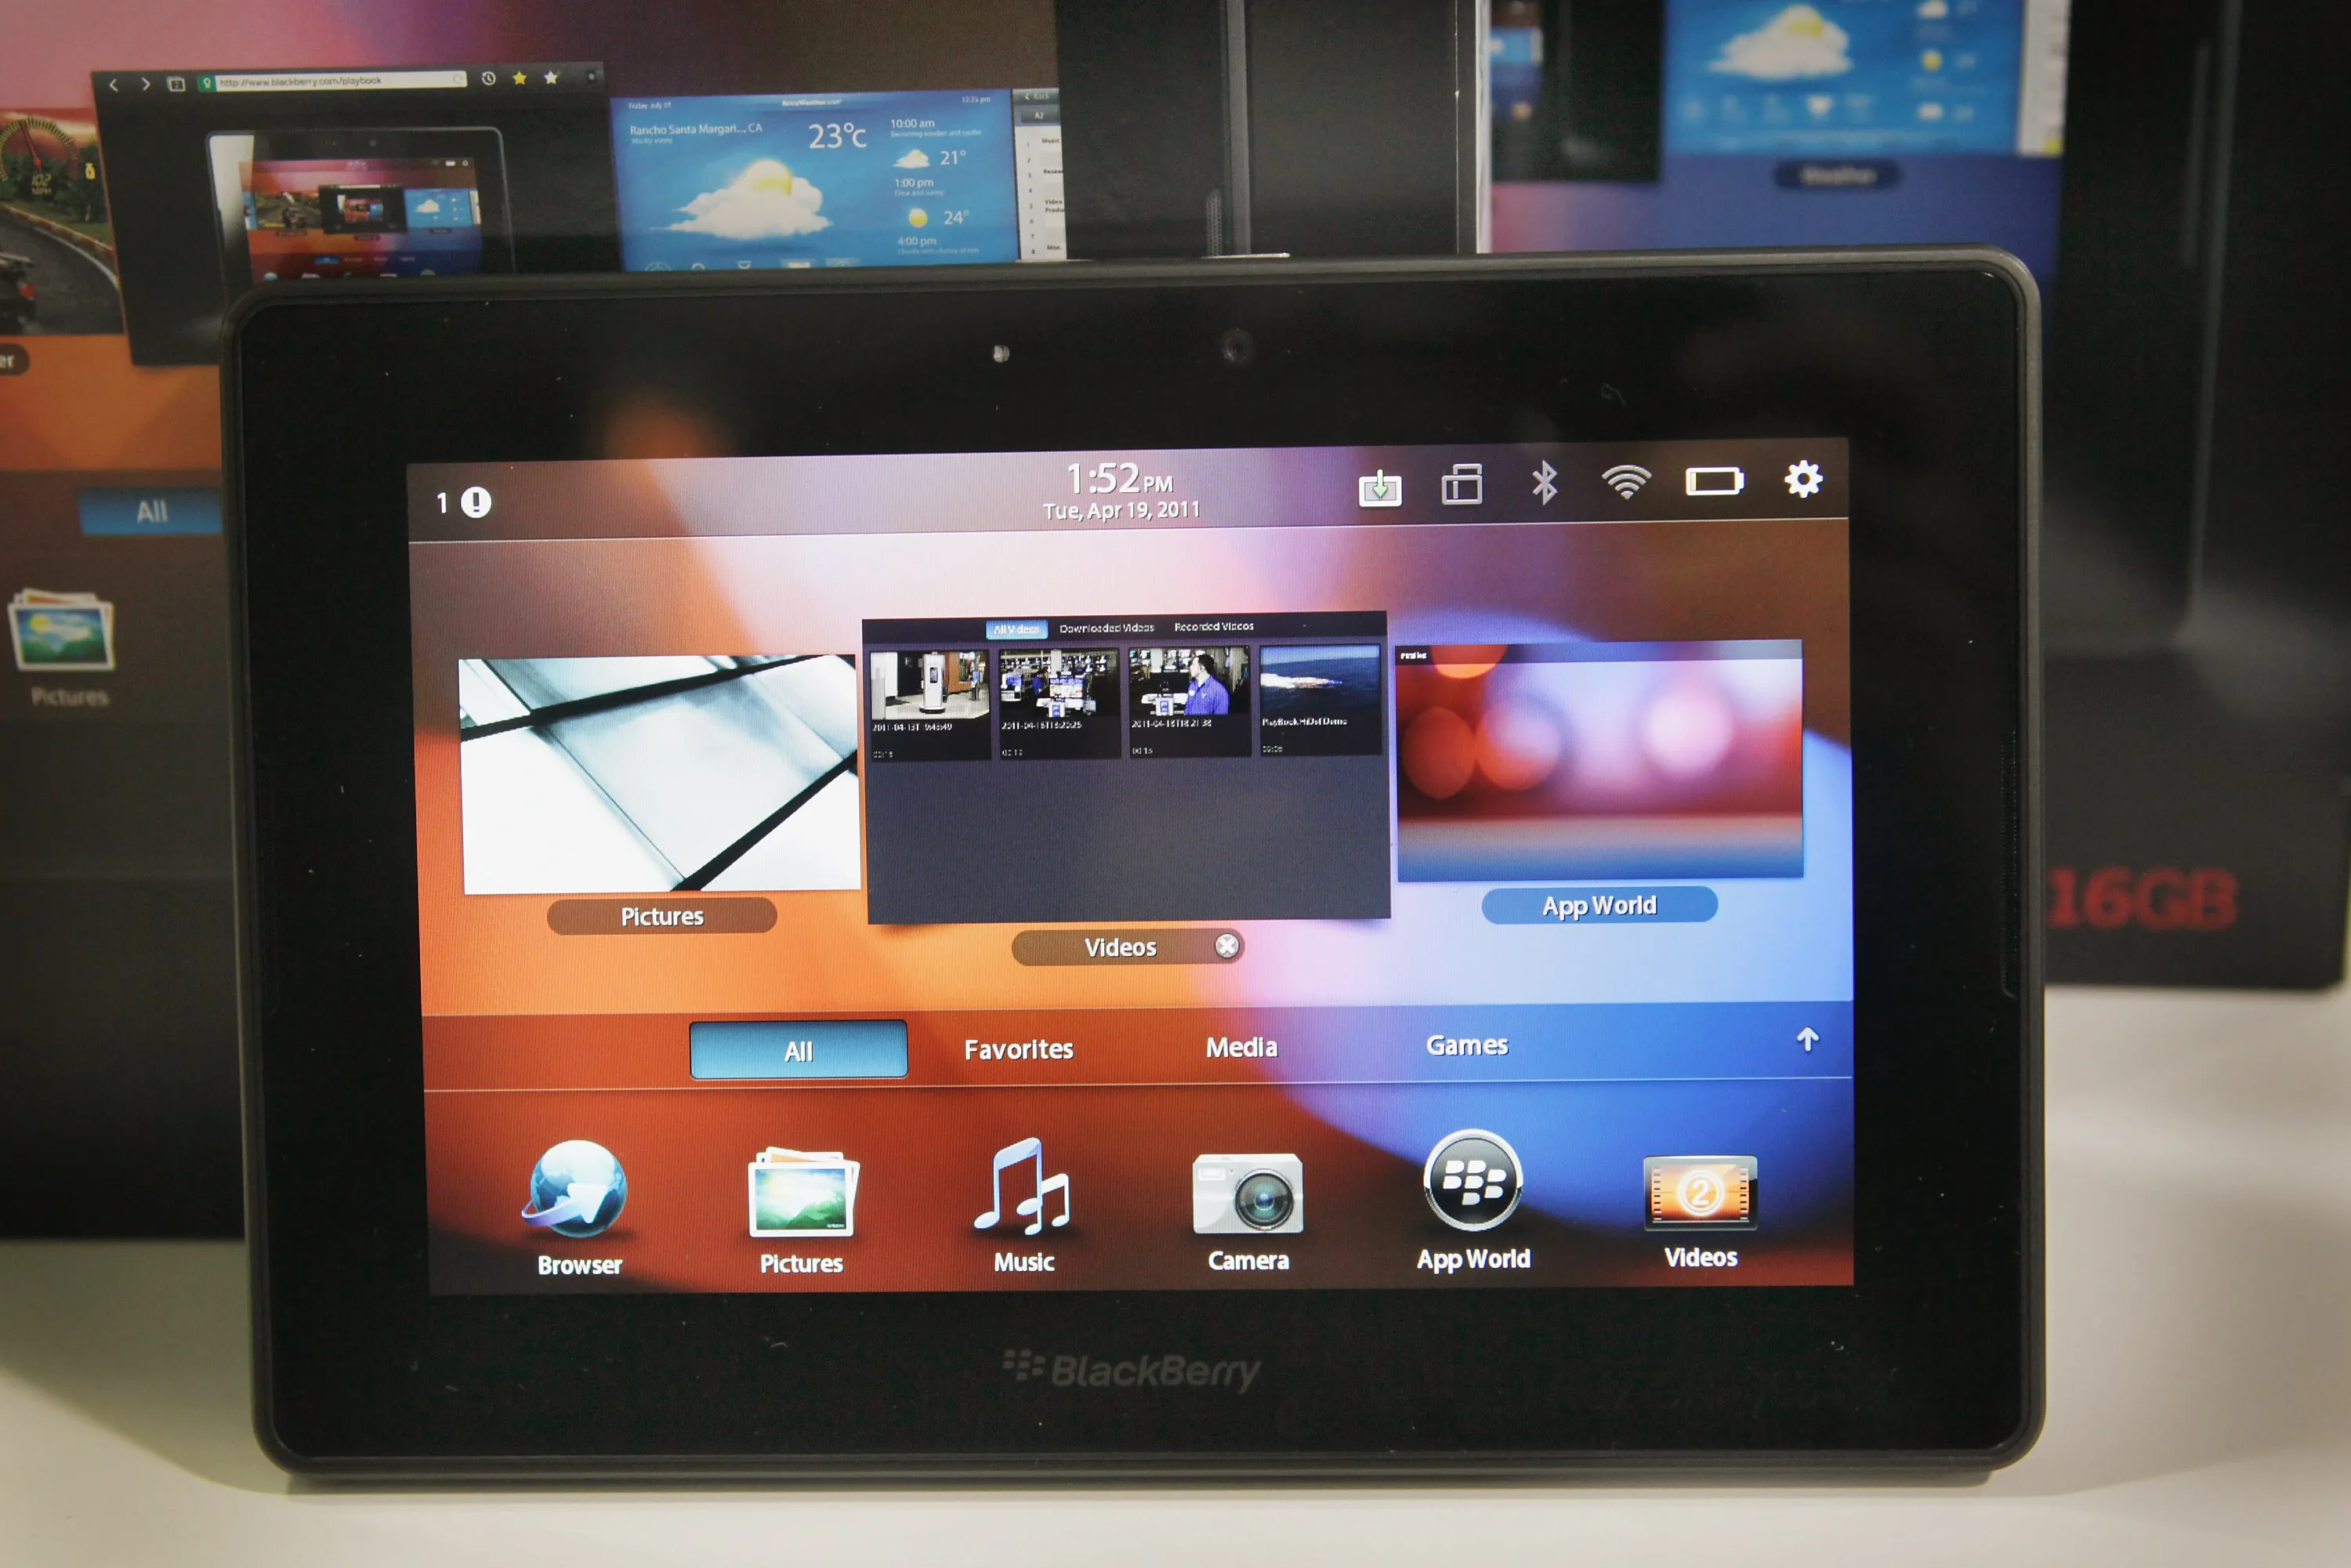 Blackberry S Playbook Tablet Goes On Sale